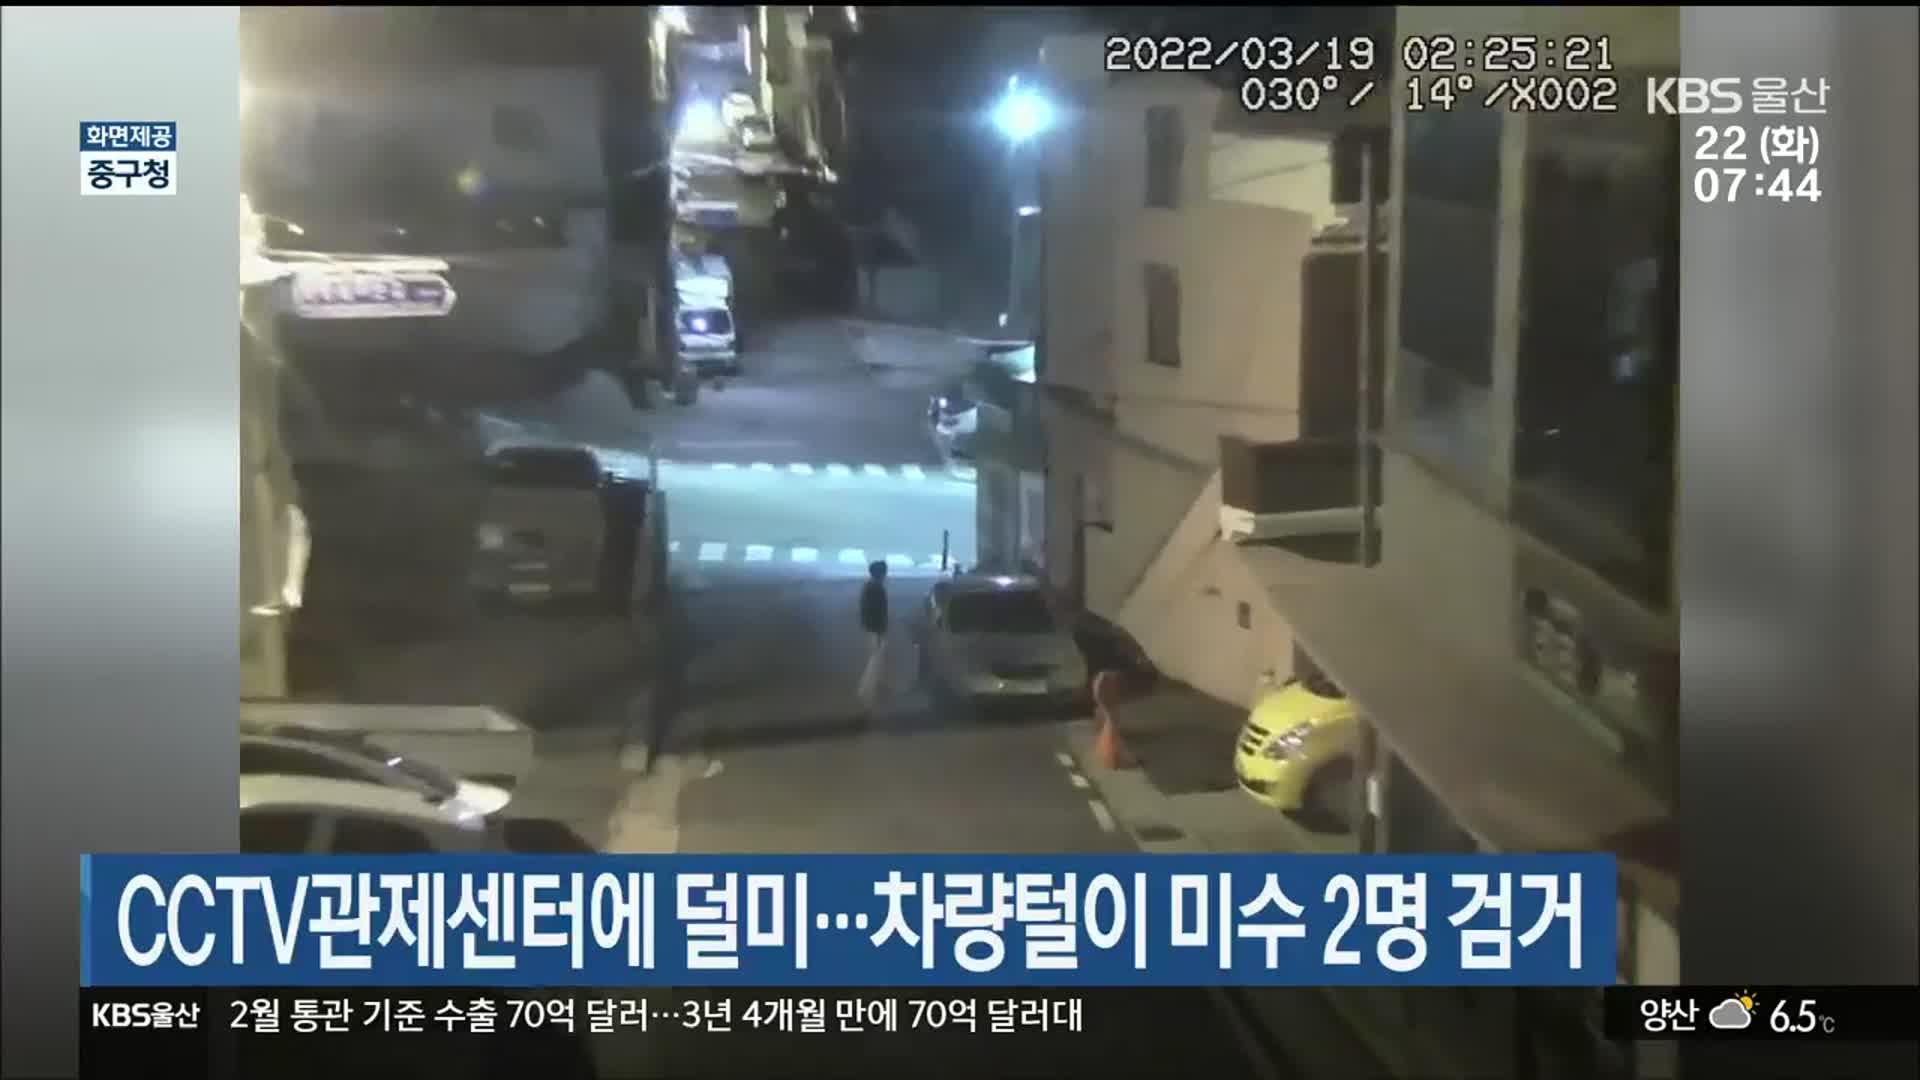 CCTV관제센터에 덜미…차량털이 미수 2명 검거